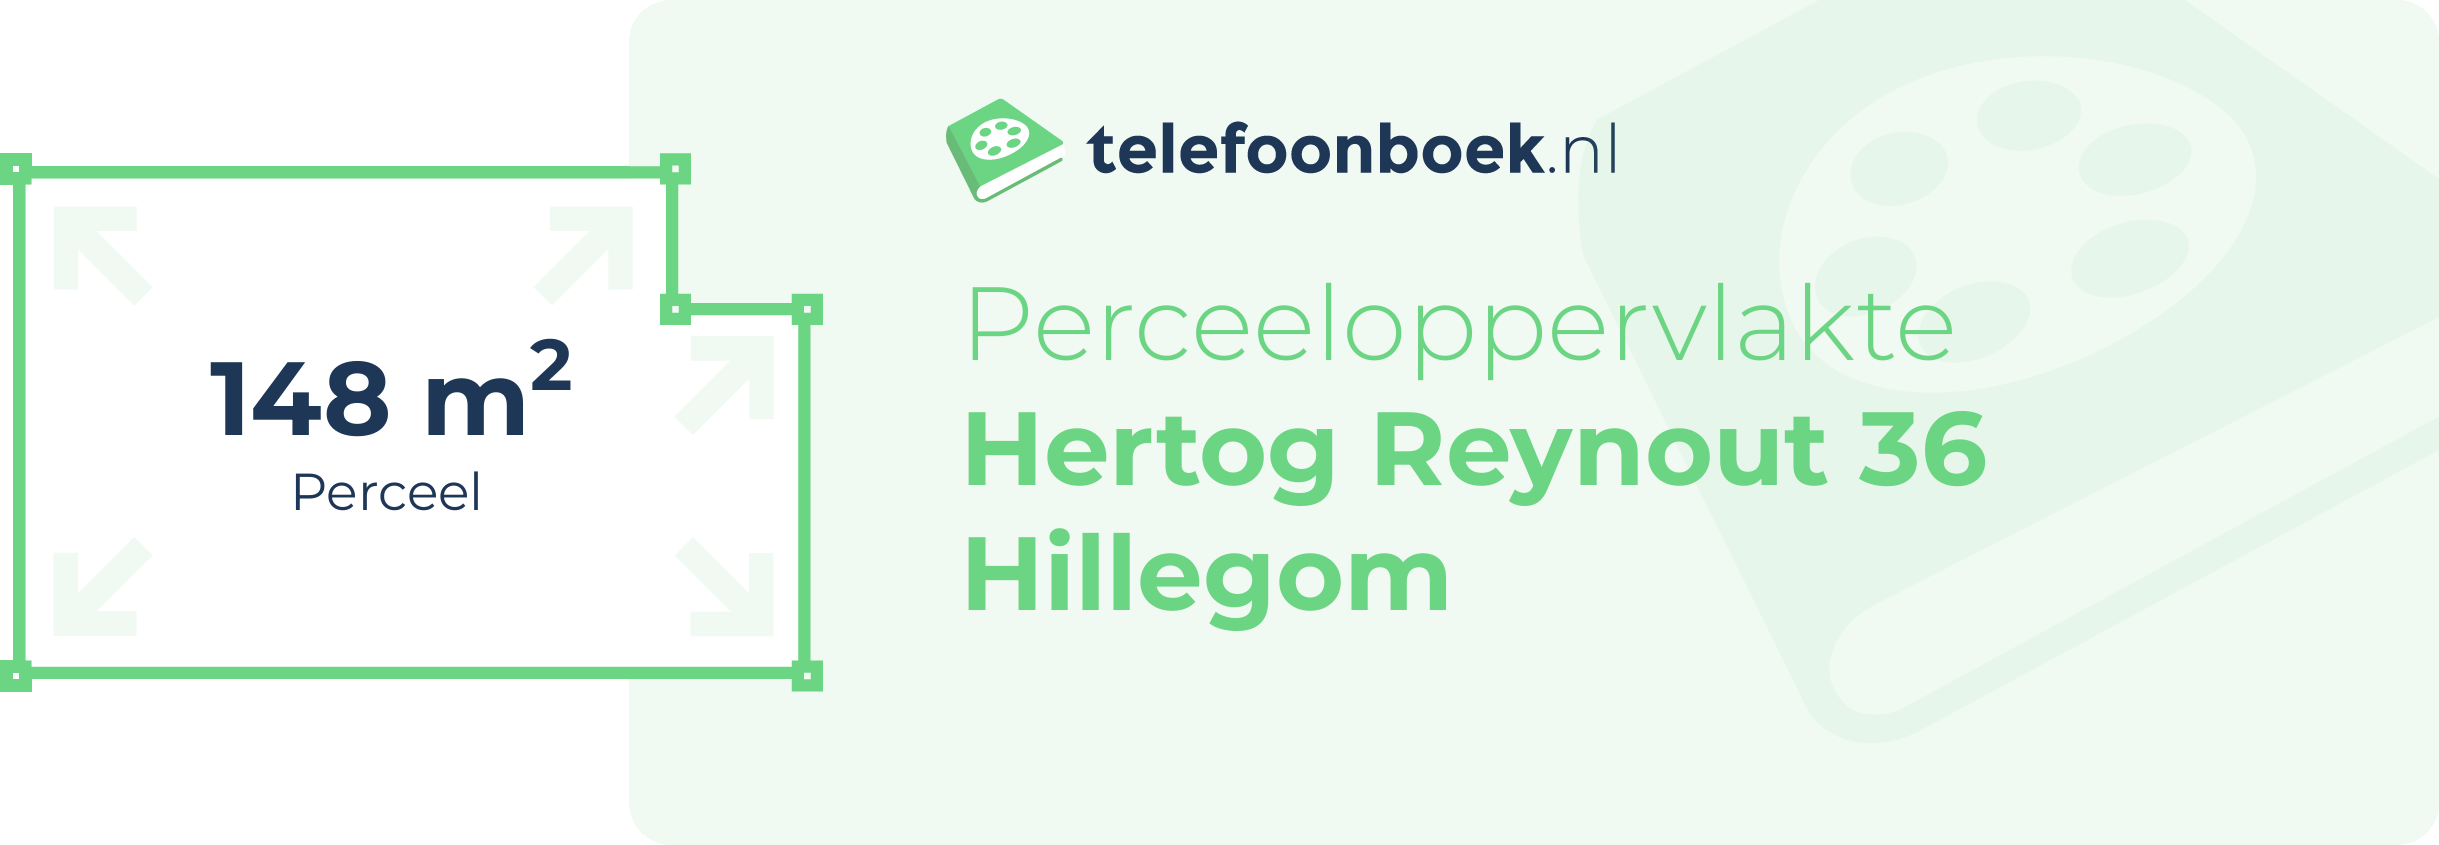 Perceeloppervlakte Hertog Reynout 36 Hillegom